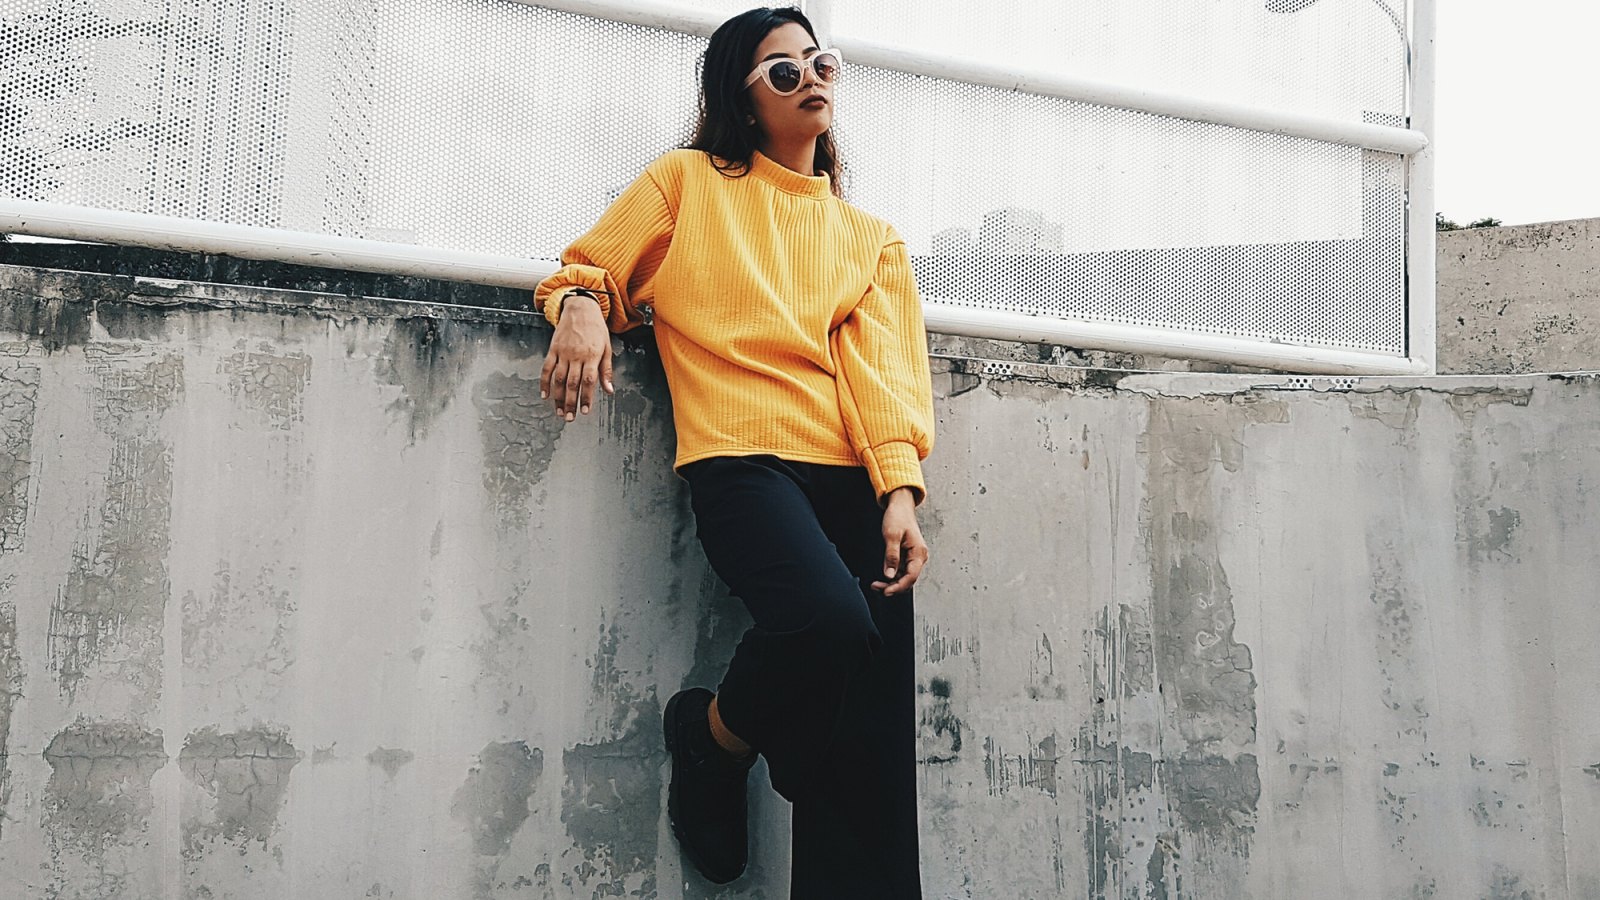 Full Length Of Woman In Yellow Sweater